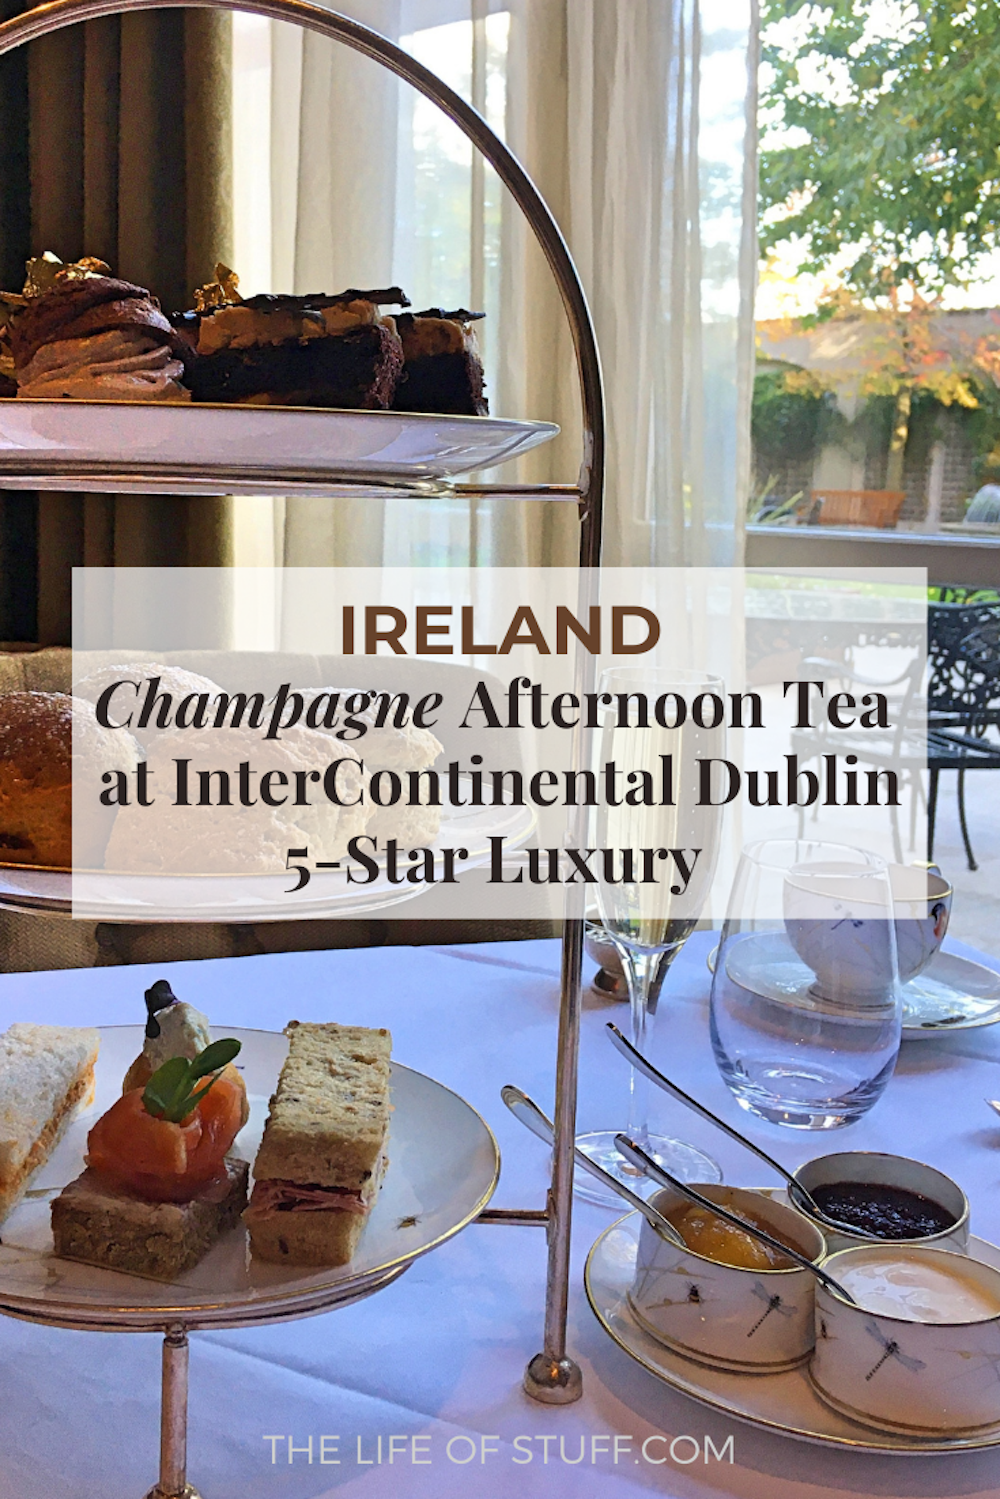 Afternoon Tea at InterContinental Dublin, 5-Star Luxury - The Life of Stuff.com